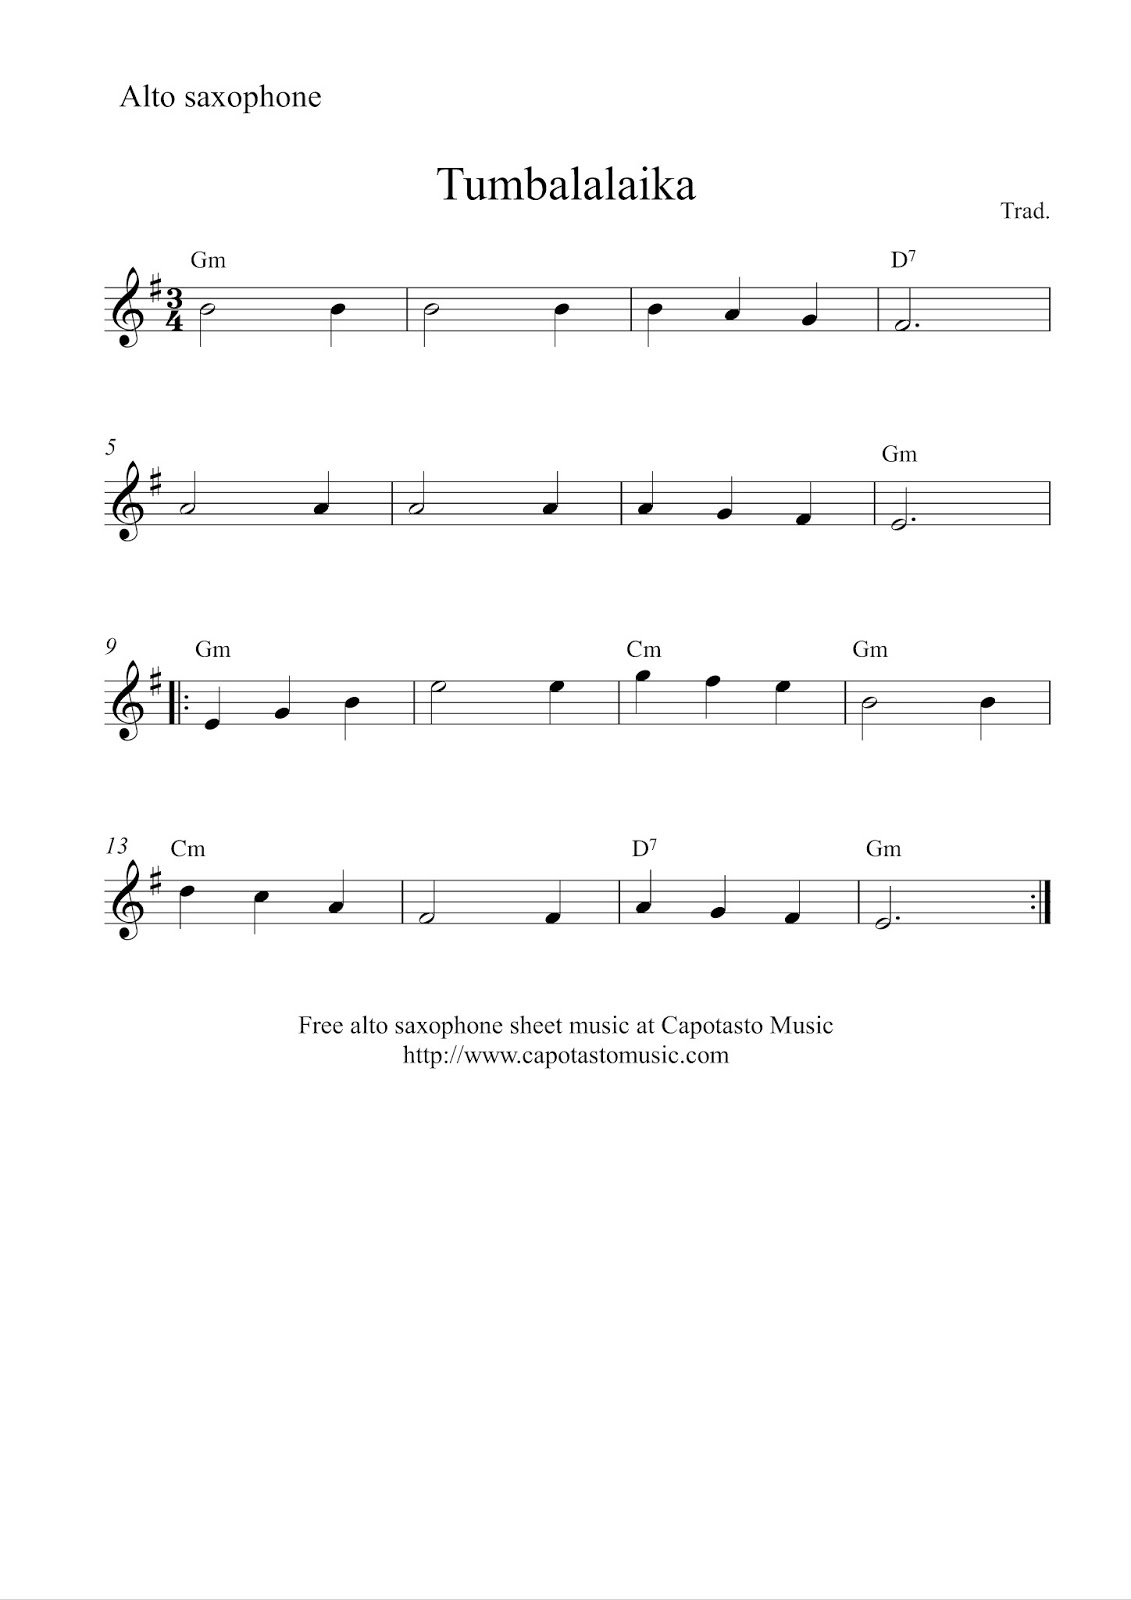 free-easy-alto-saxophone-sheet-music-tumbalalaika